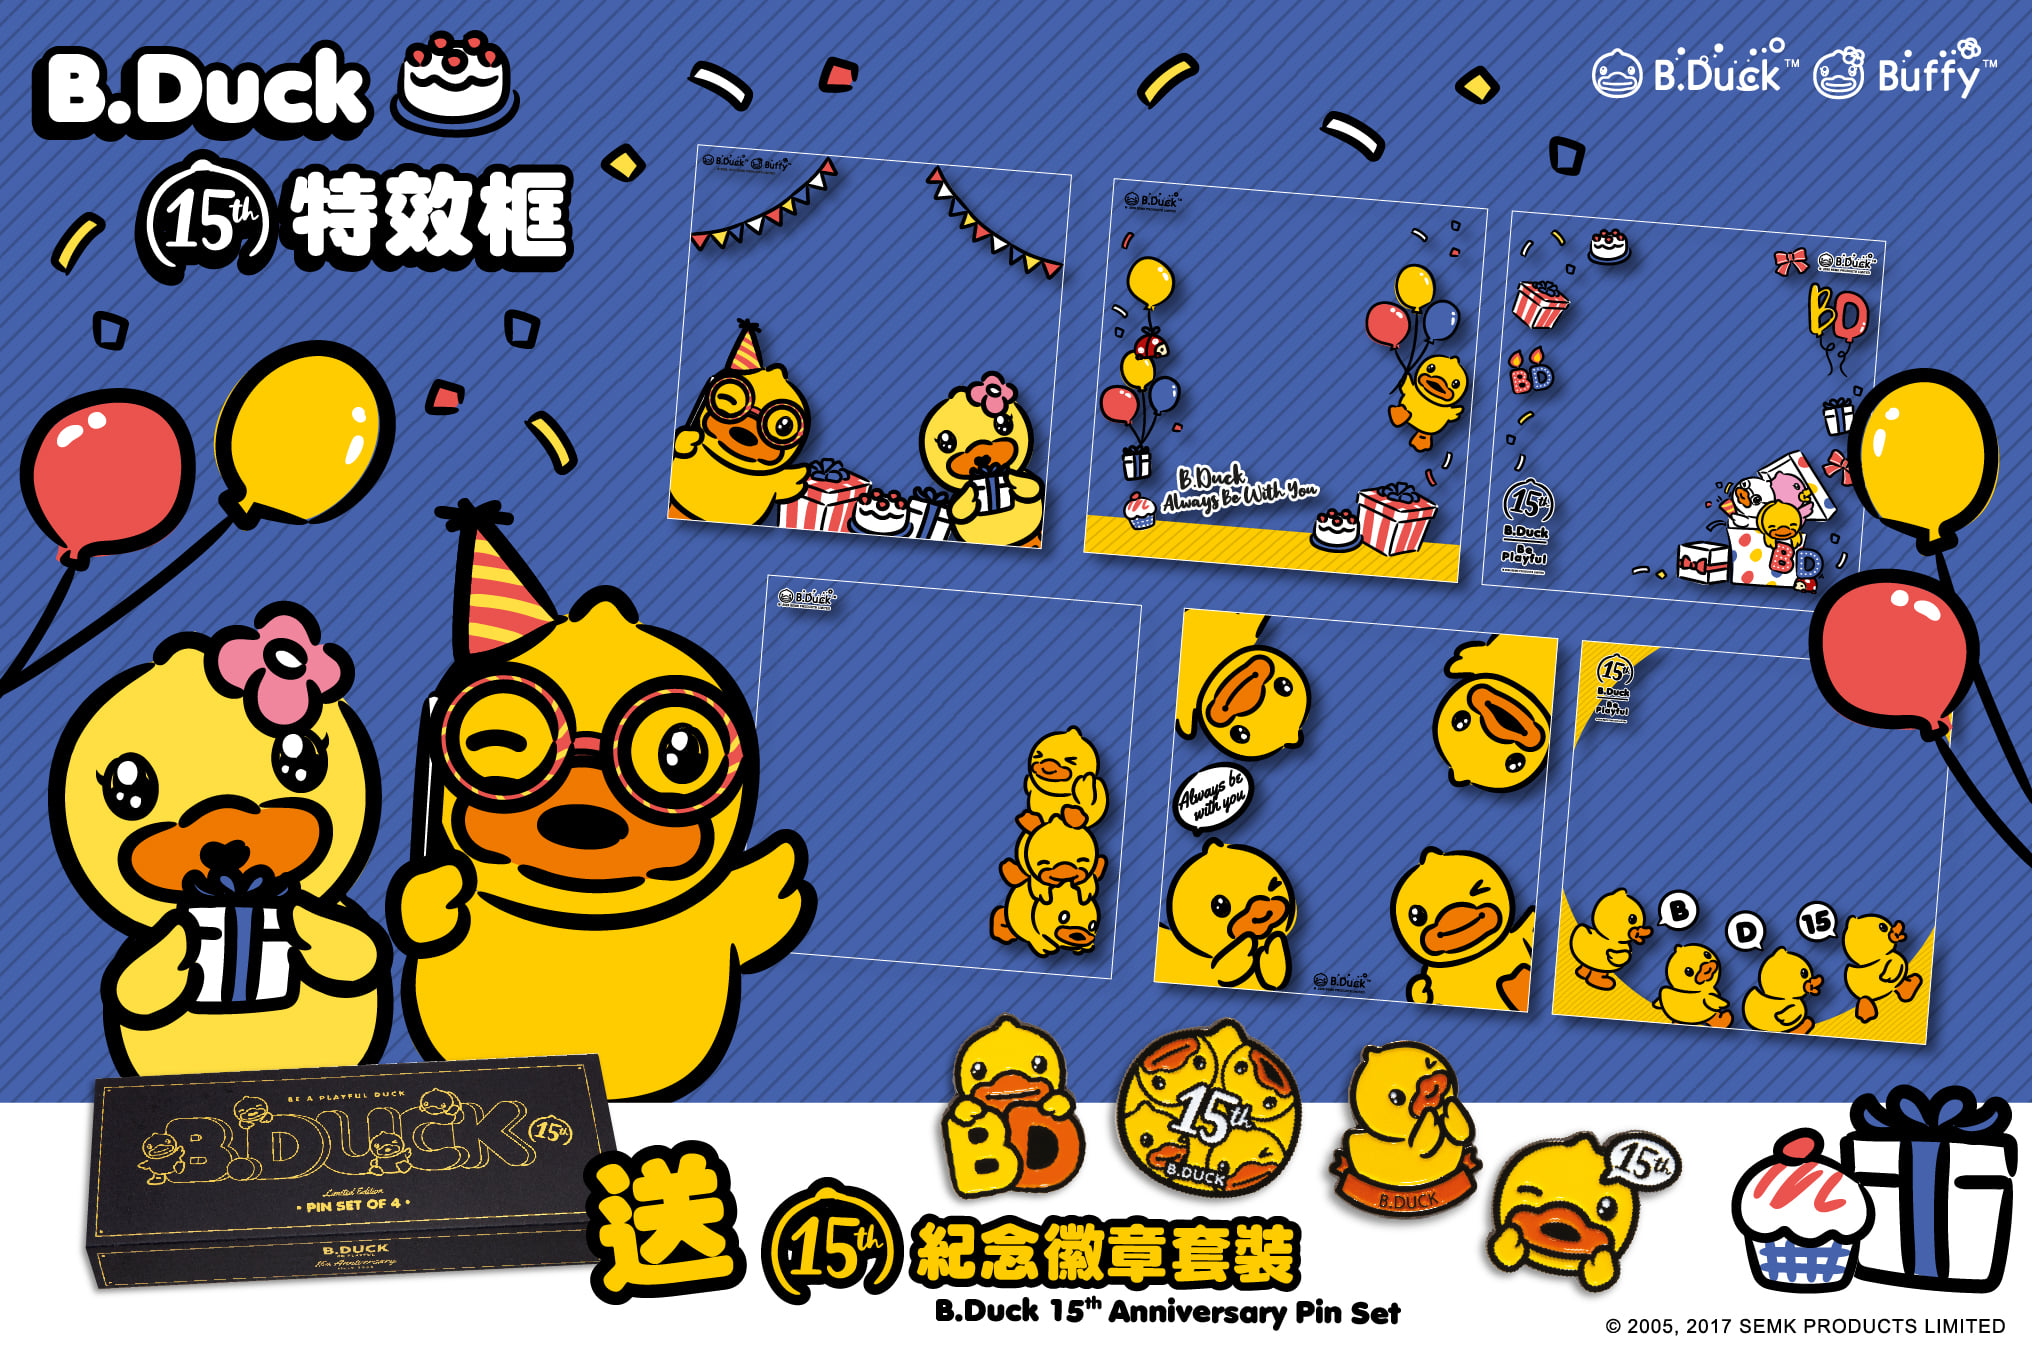 B.Duck Fan Page 有獎遊戲送 B.Duck 15周年紀念徽章套裝